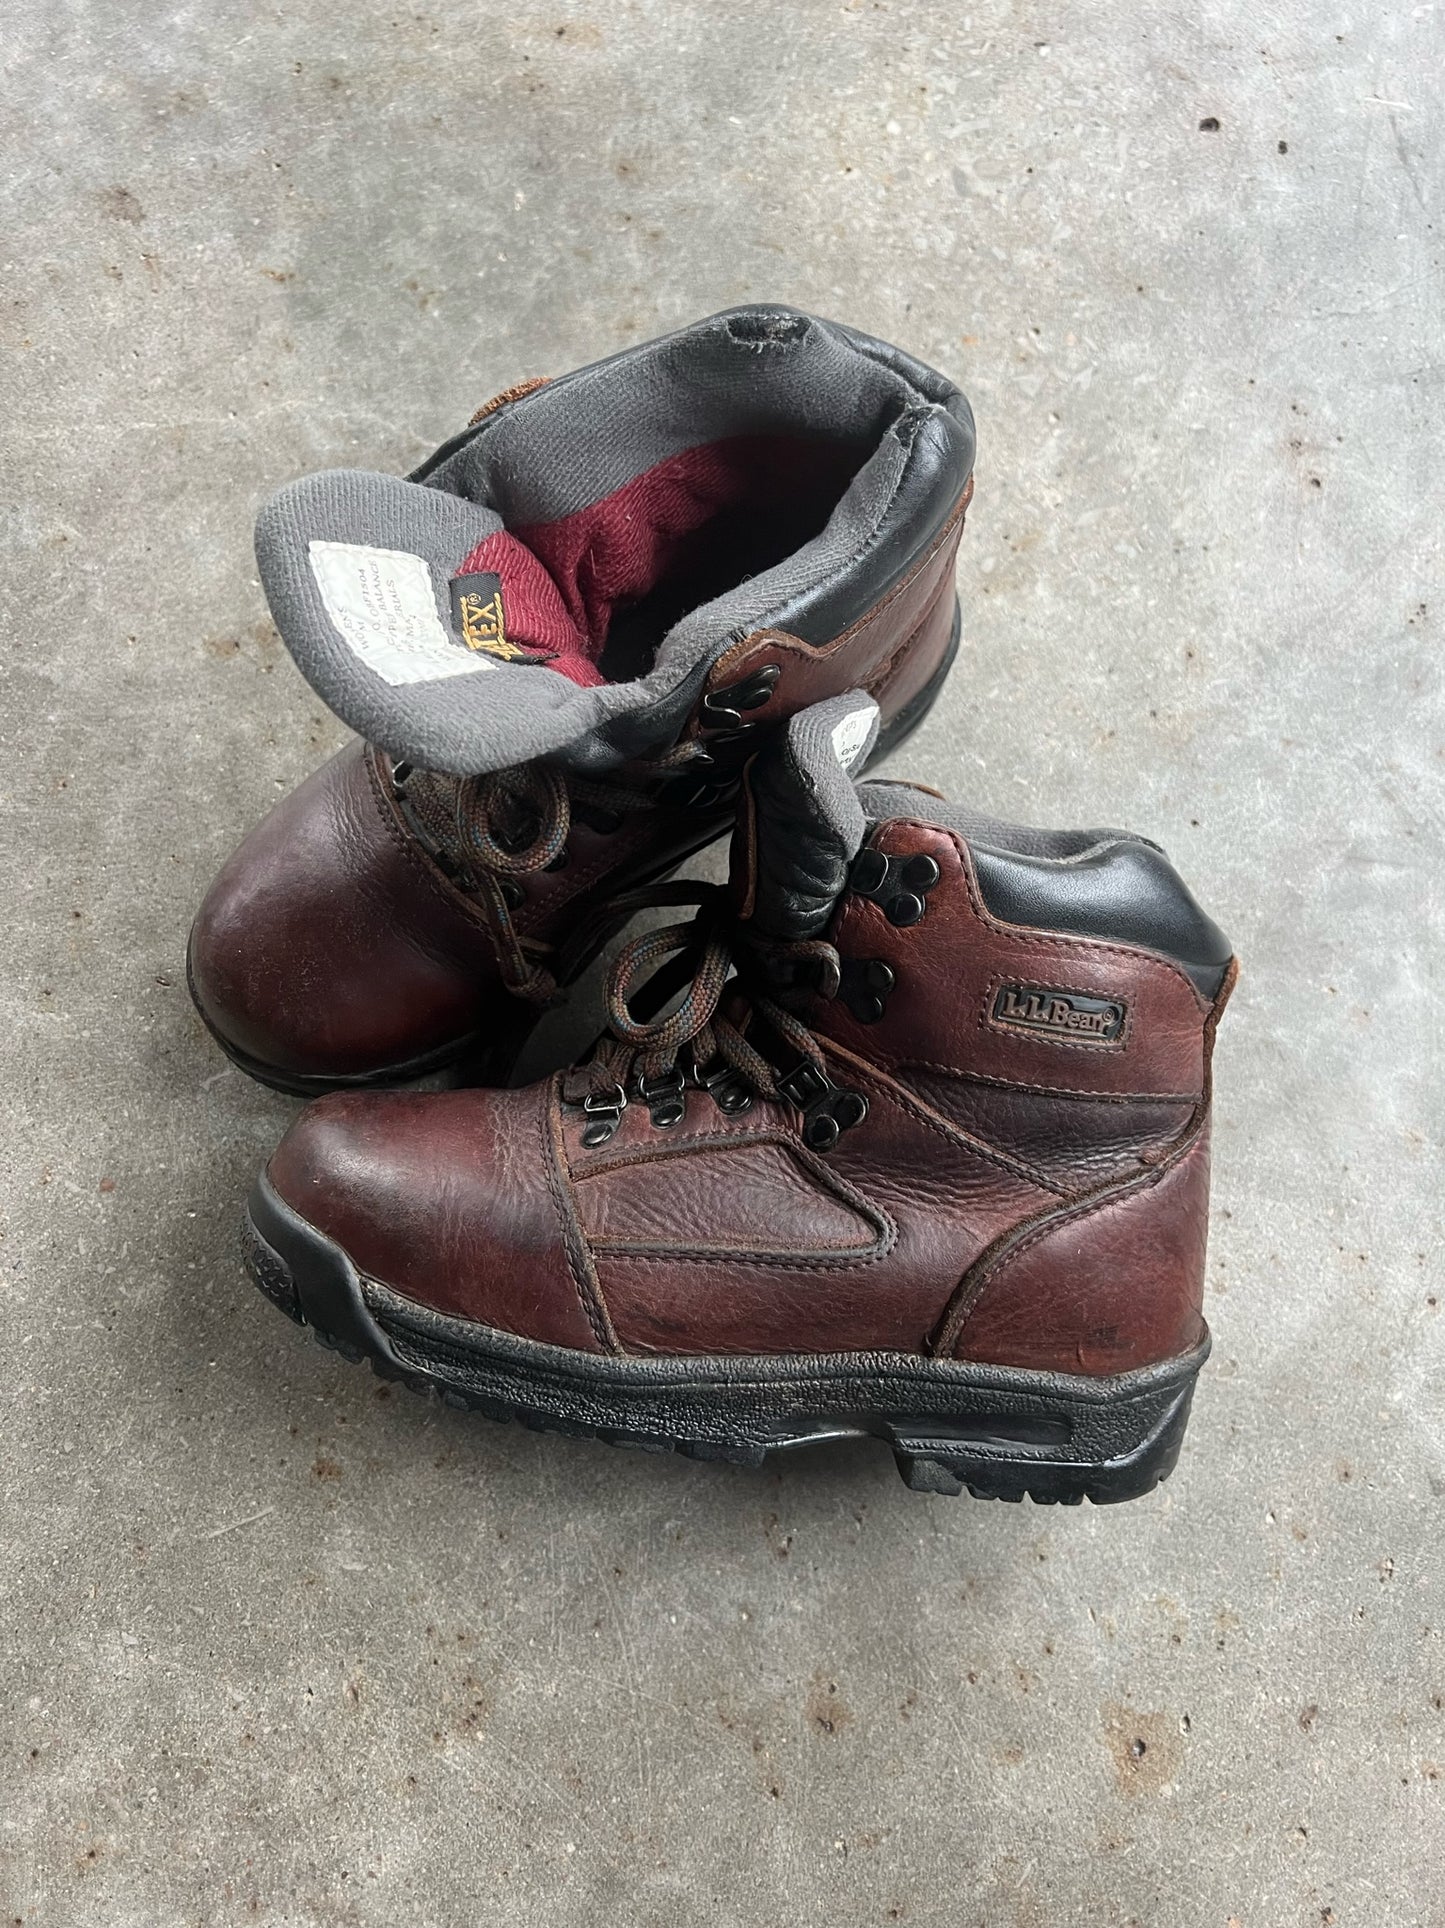 Vintage L.L. Bean Hiking Boots - 6